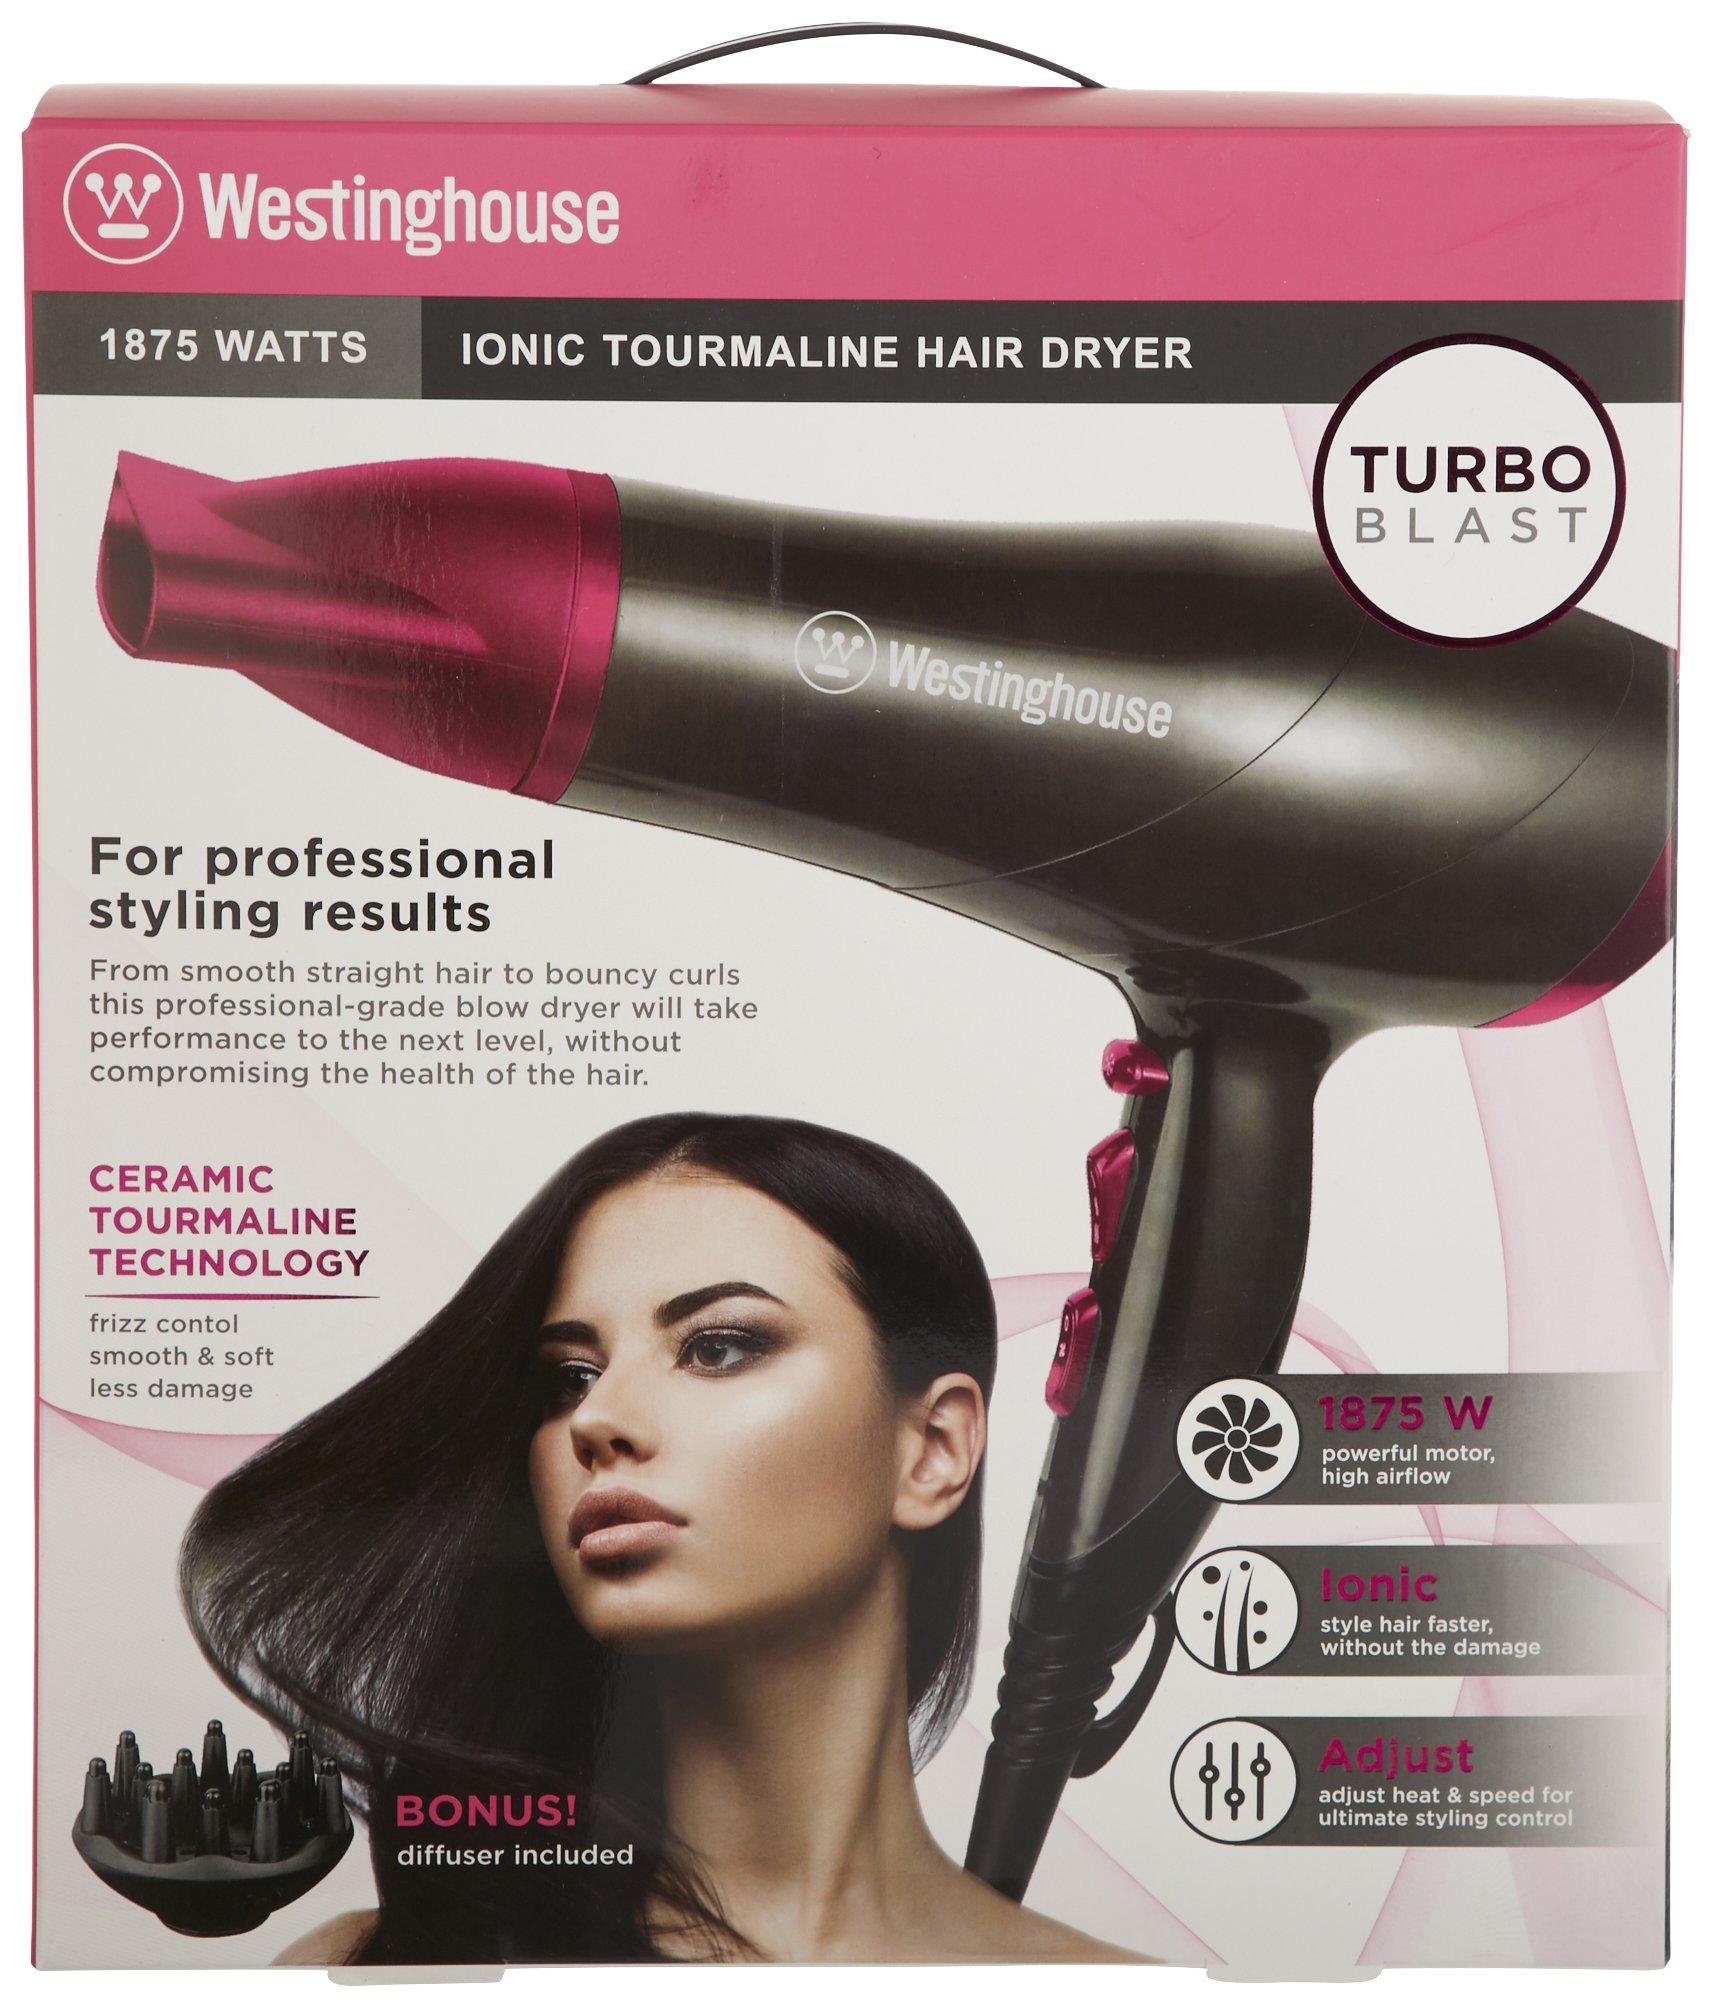 Westinghouse Iconic Tourmaline Turbo Blast Hair Dryer